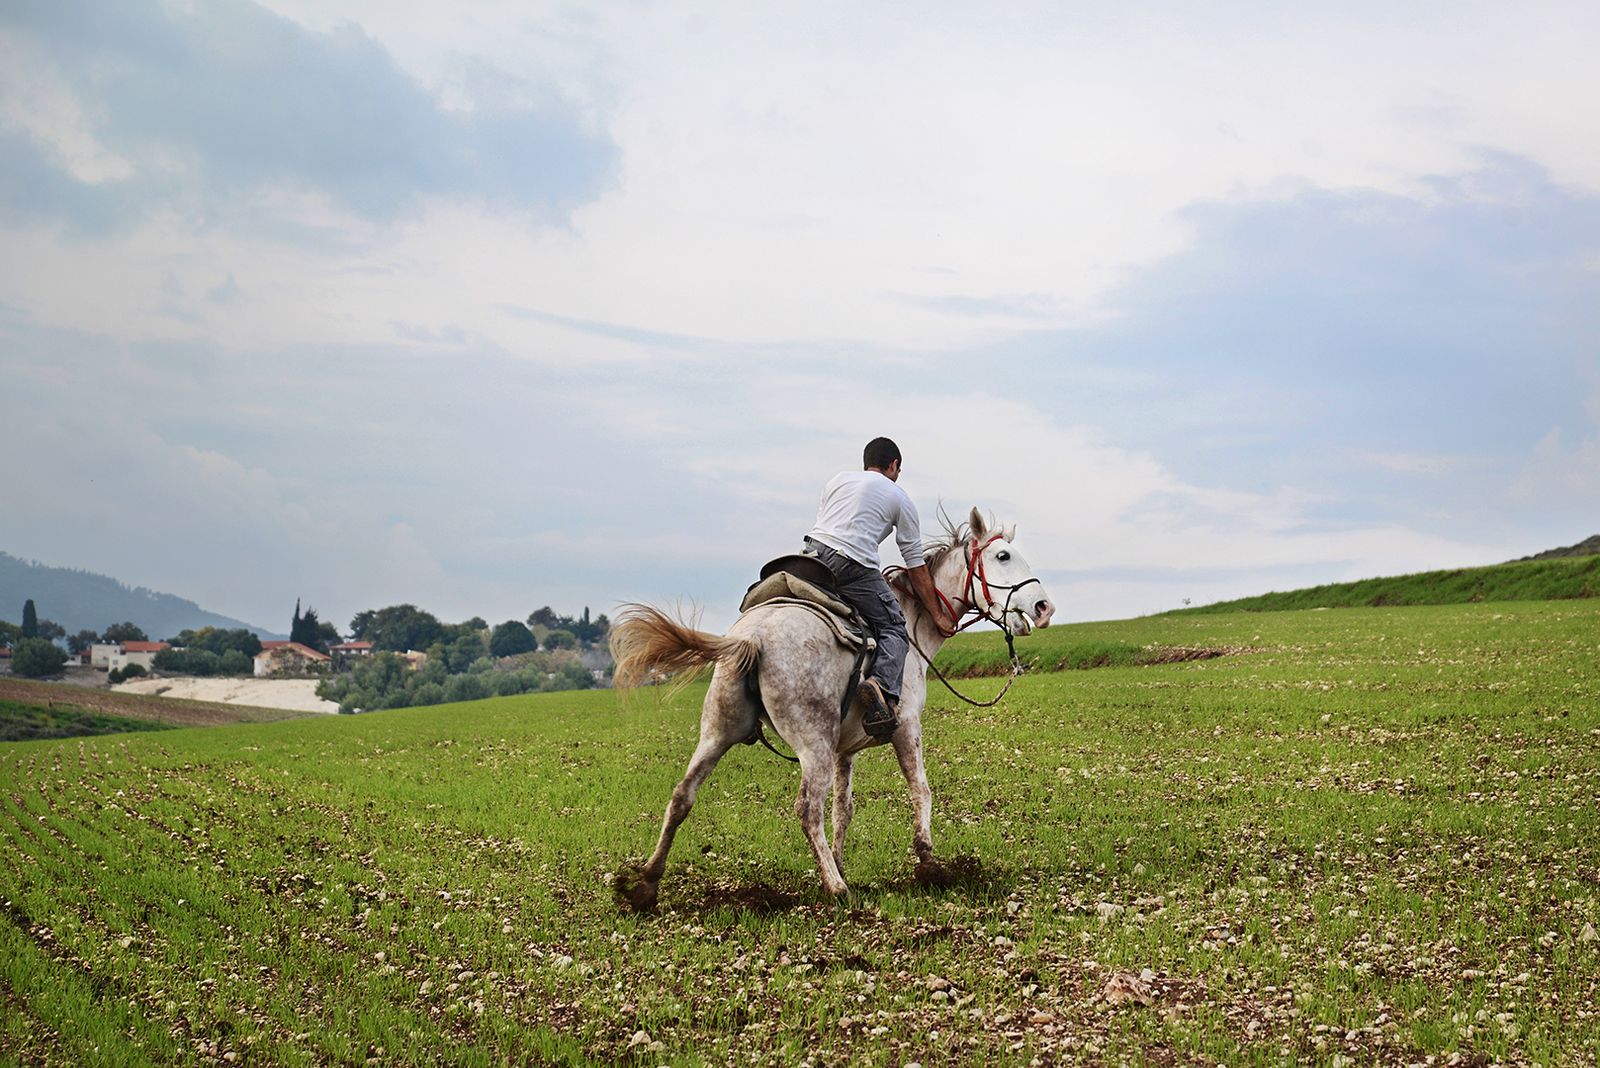 © Daniel Rolider - Rami rides his horse in the fields of Kiryat Tivon, Israel, November 2014.